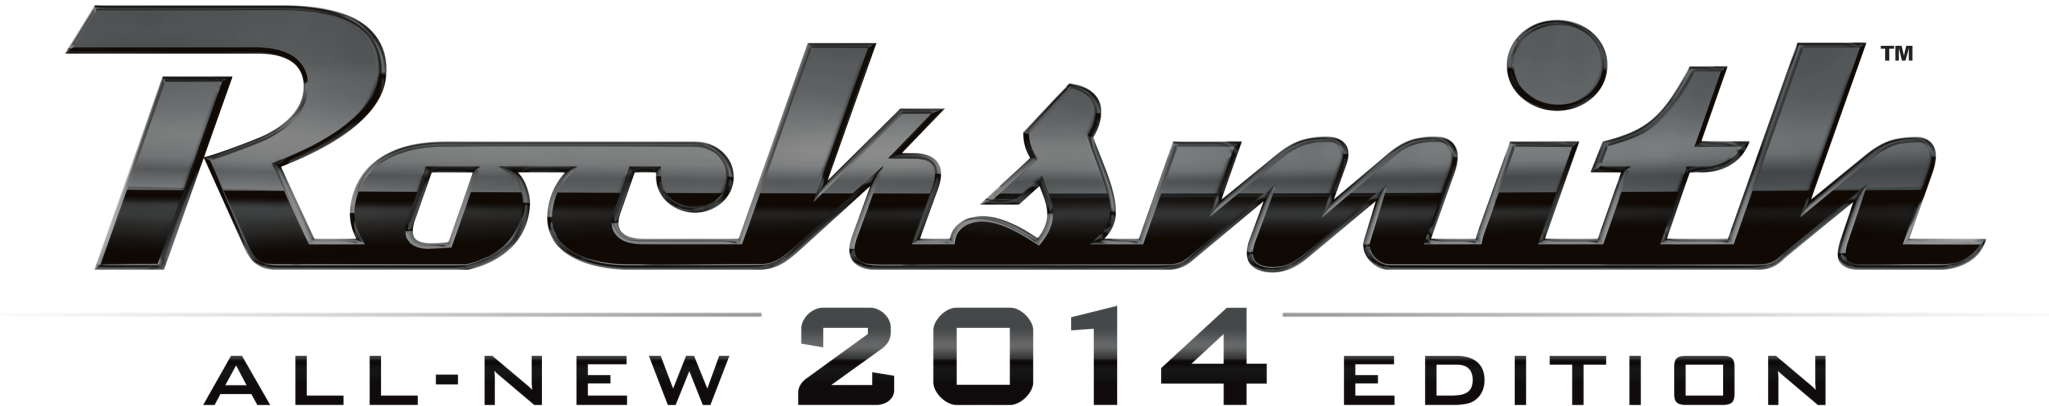 Edition logo. Rocksmith 2014 Edition Remastered логотип. First Edition лого. Edition one логотип. Arc Edition лого.